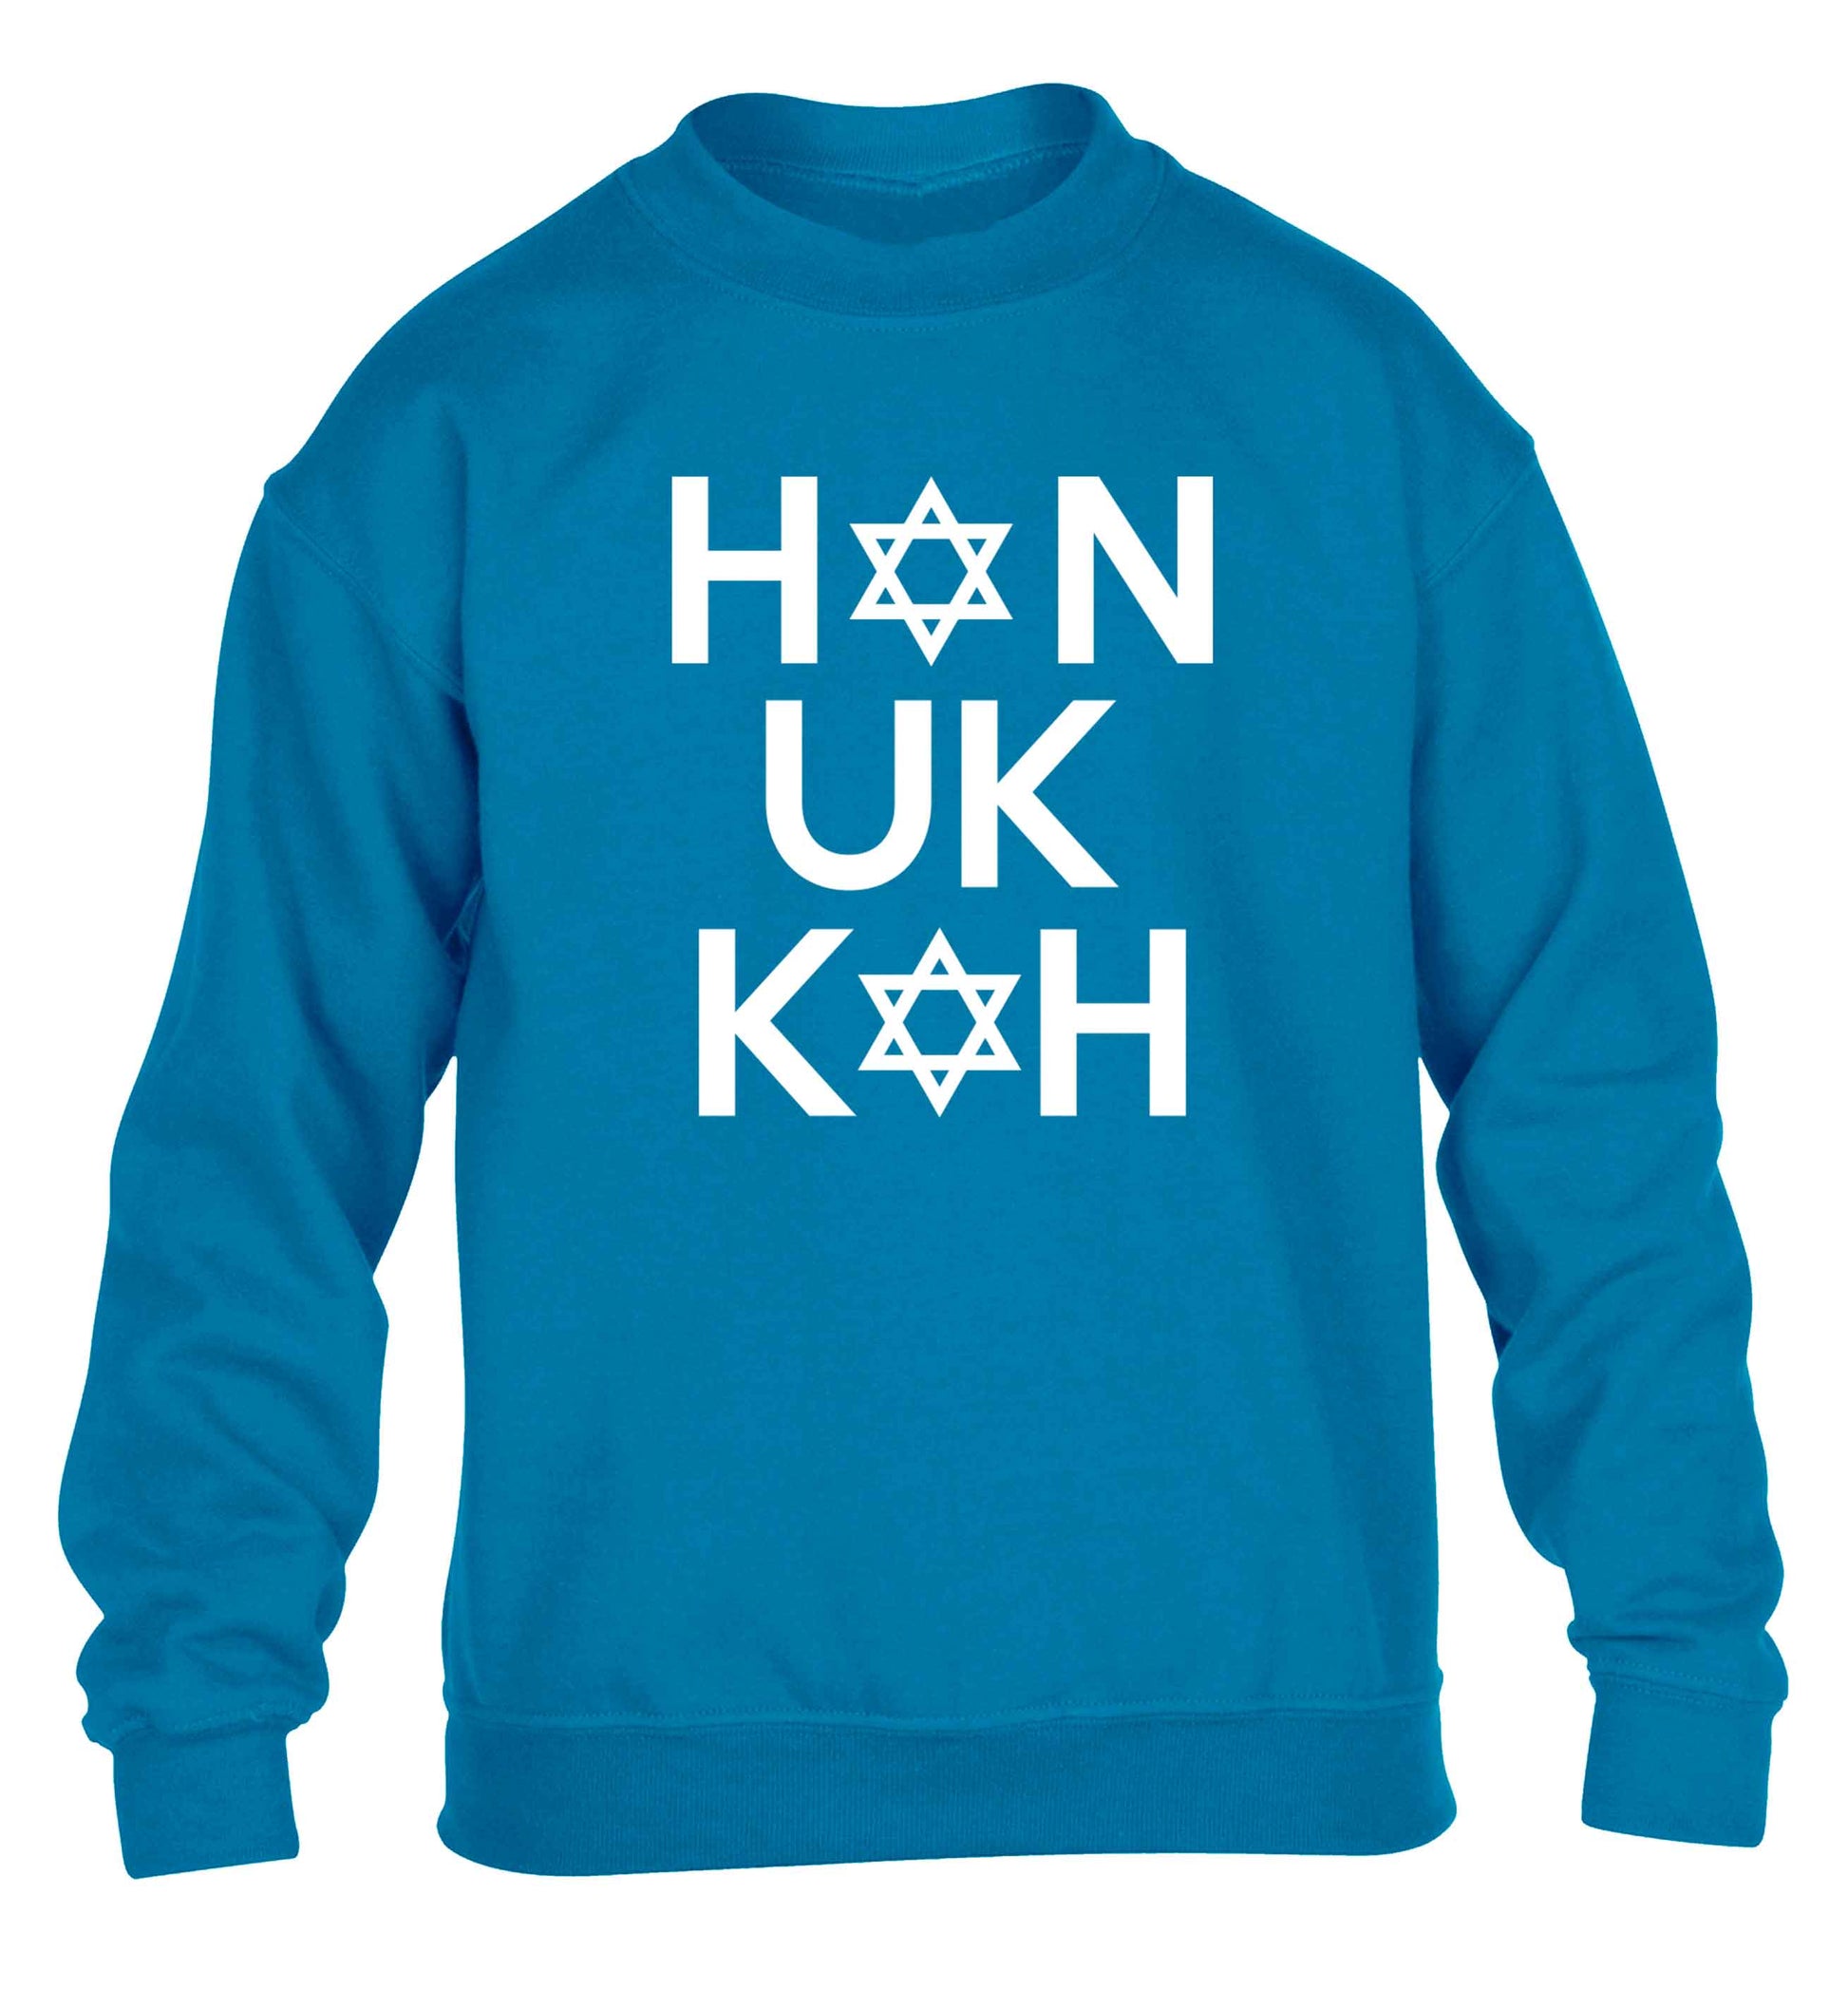 Han uk kah  Hanukkah star of david children's blue sweater 12-13 Years